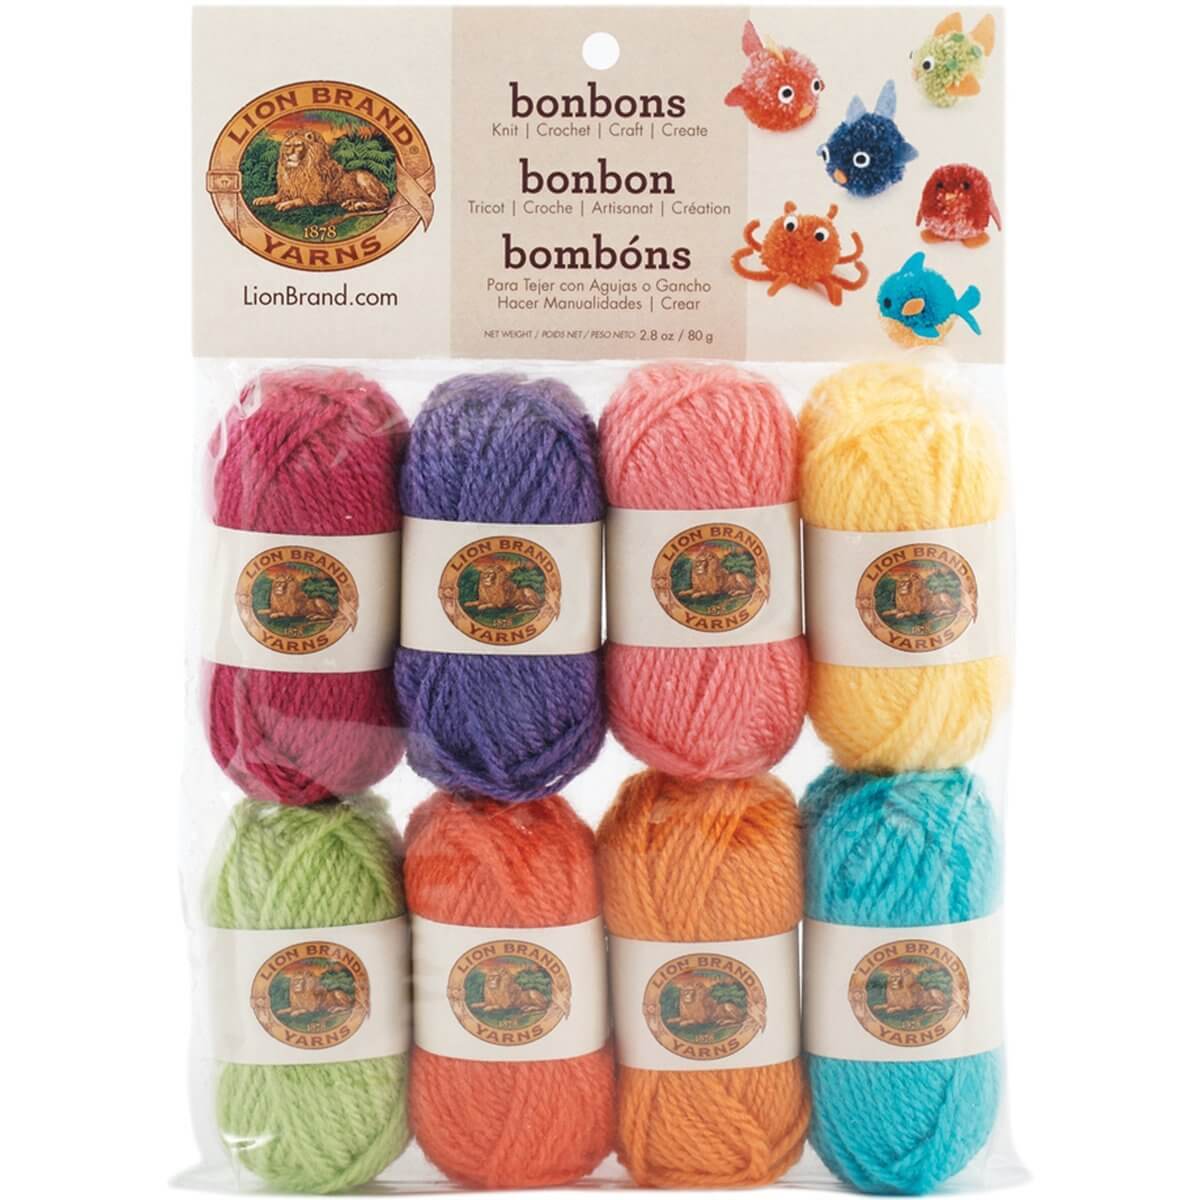 yarn for childrens crafts